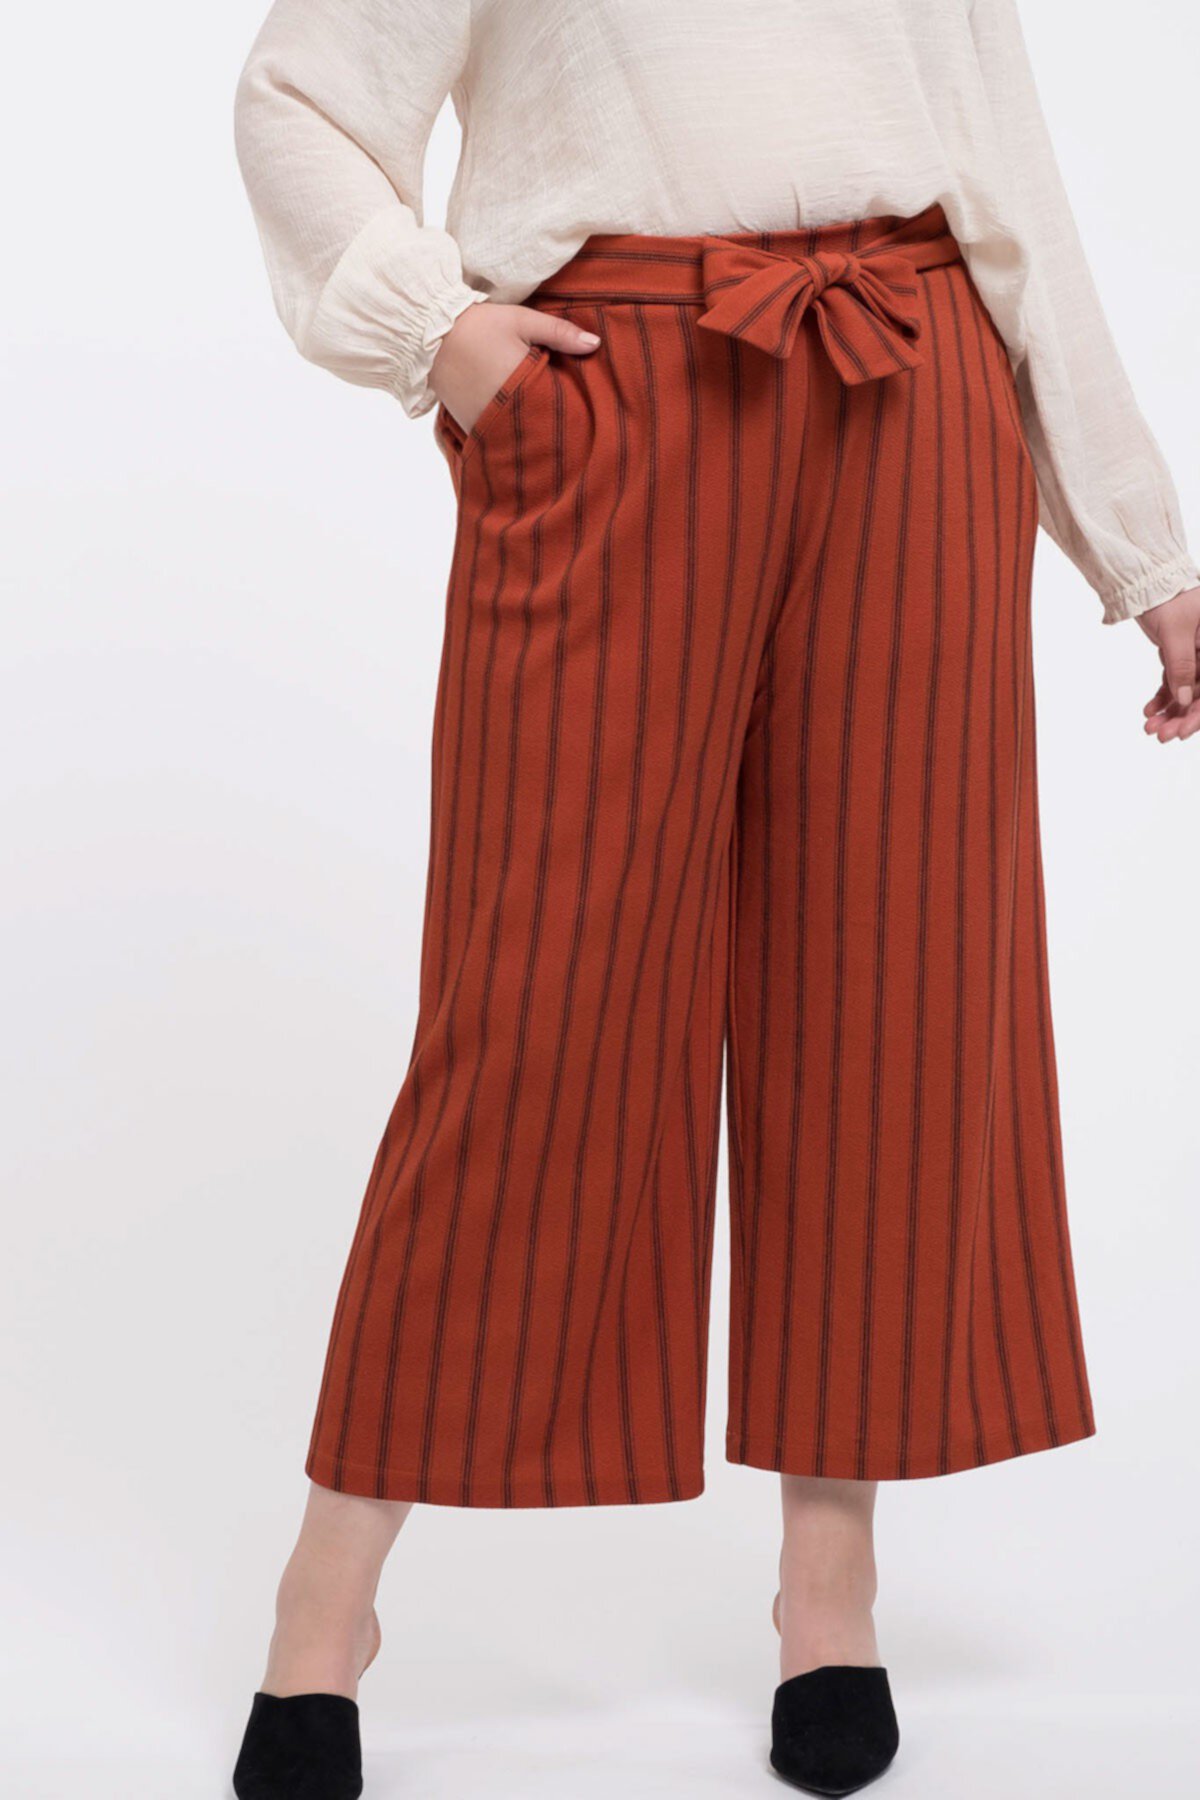 Узкие полосатые брюки-кюлоты (плюс размер) Perch by Blu Pepper